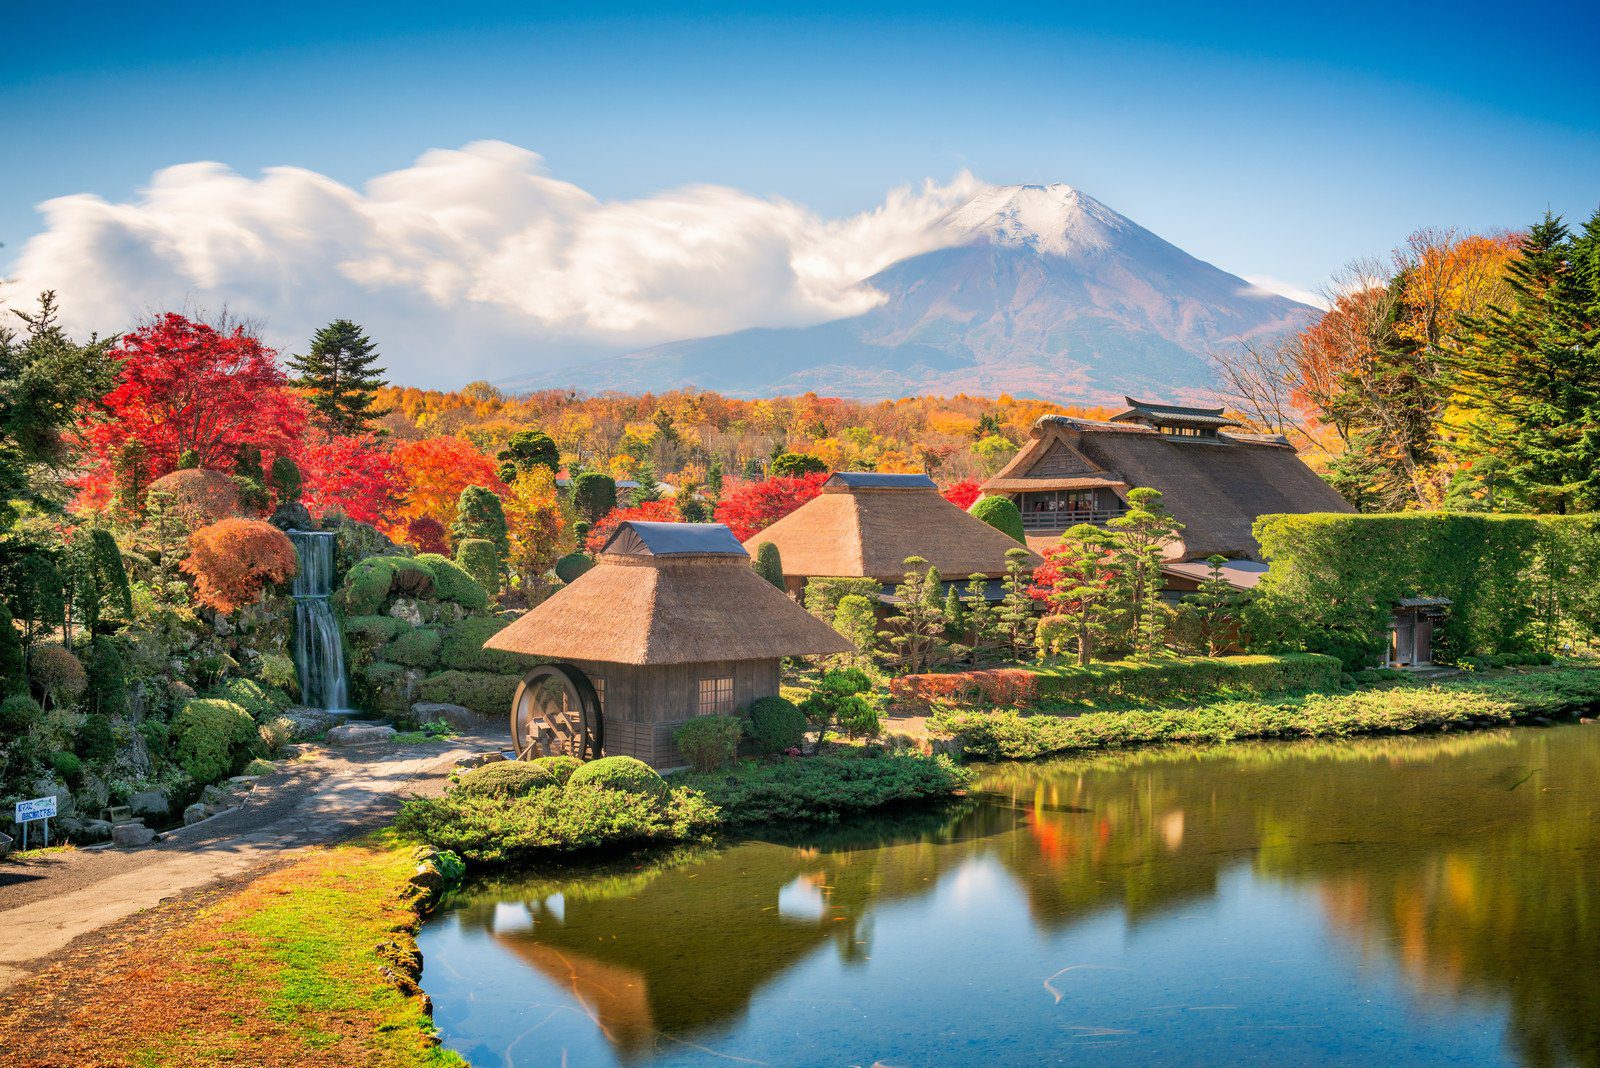 Oshino Hakkai Village in the Five Lakes Region near Mt Fuji